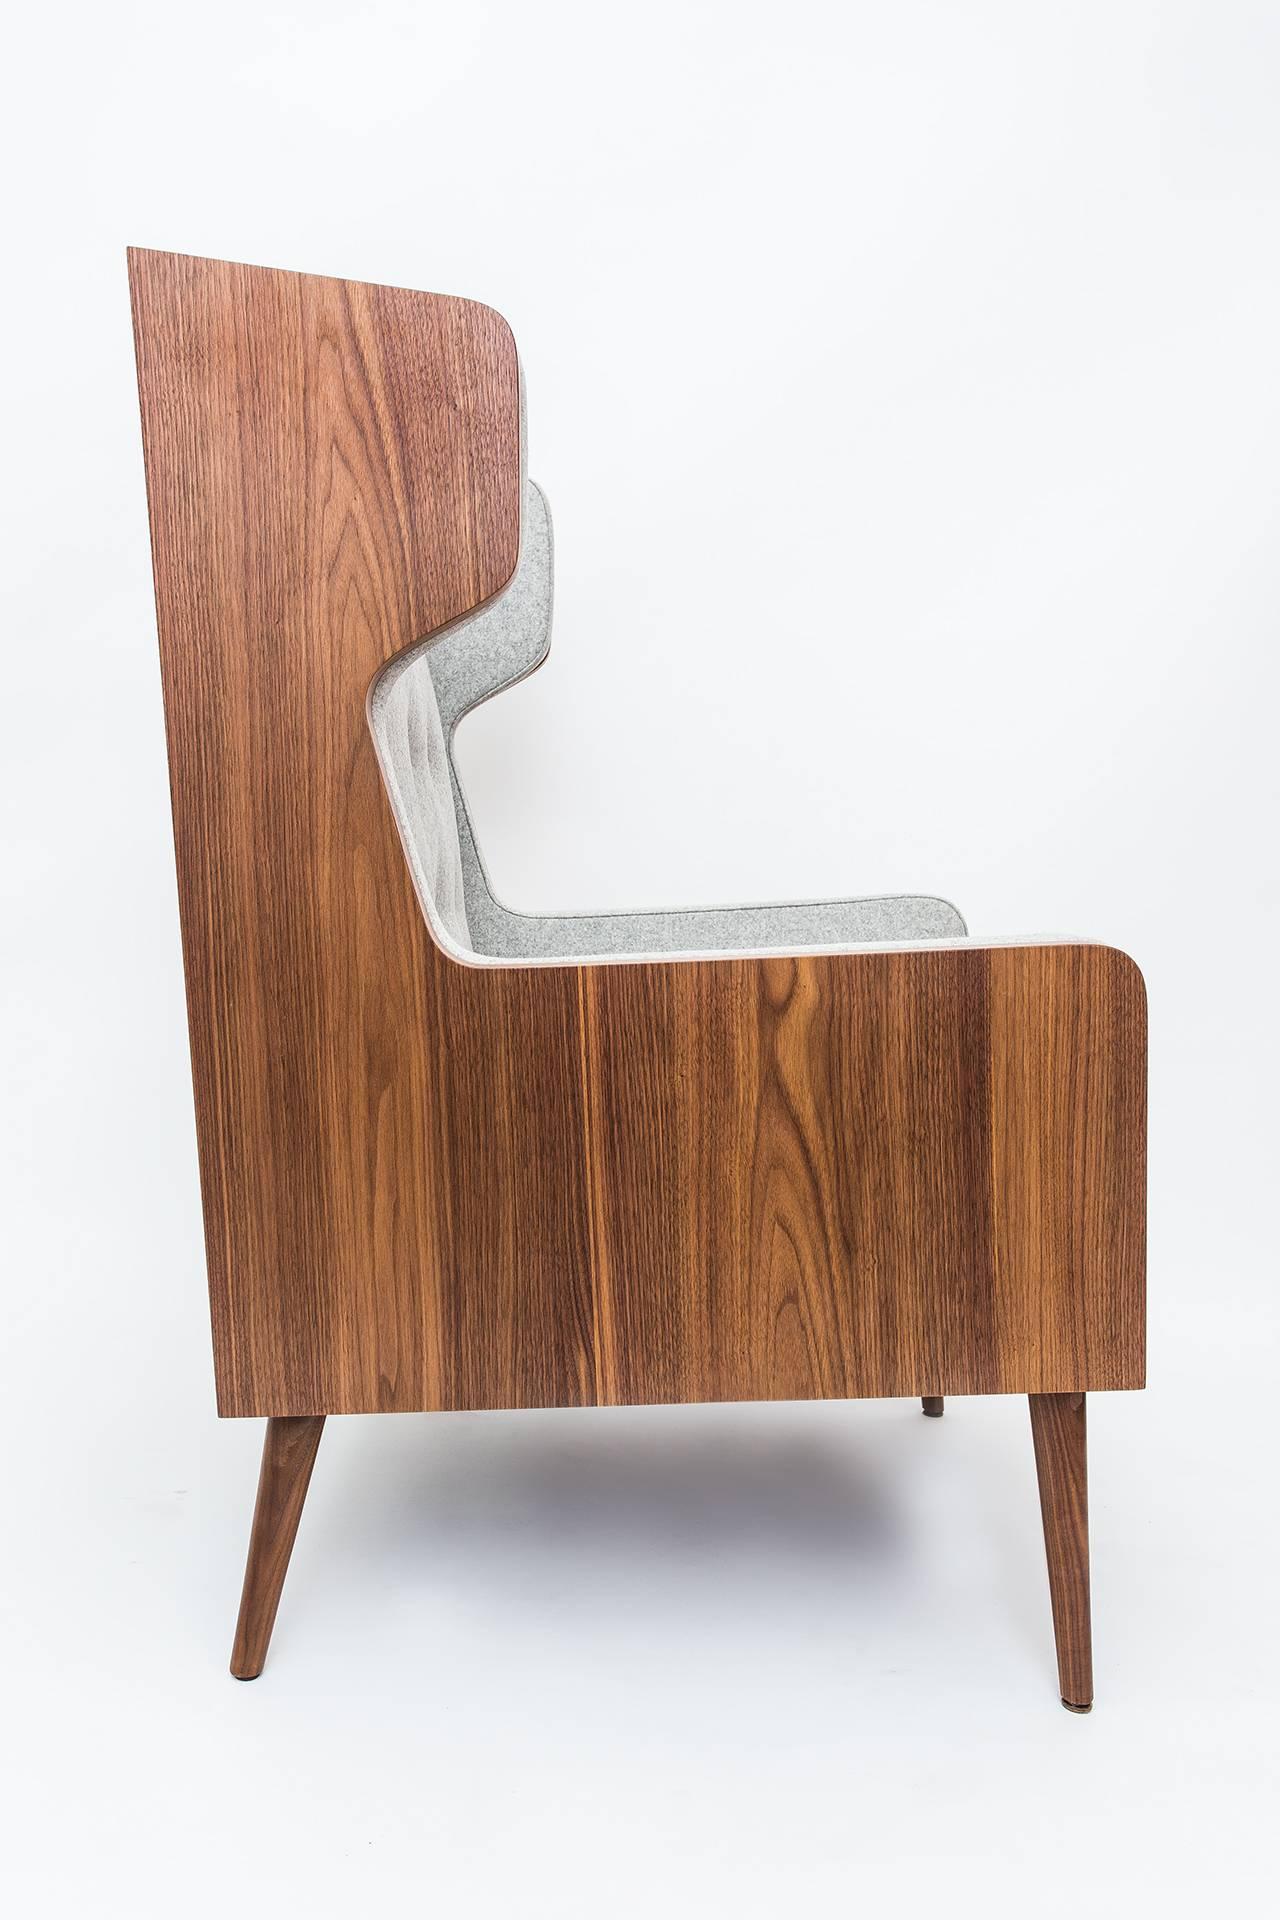 Woodwork Contemporary American Walnut Felt Gray Armchair For Sale